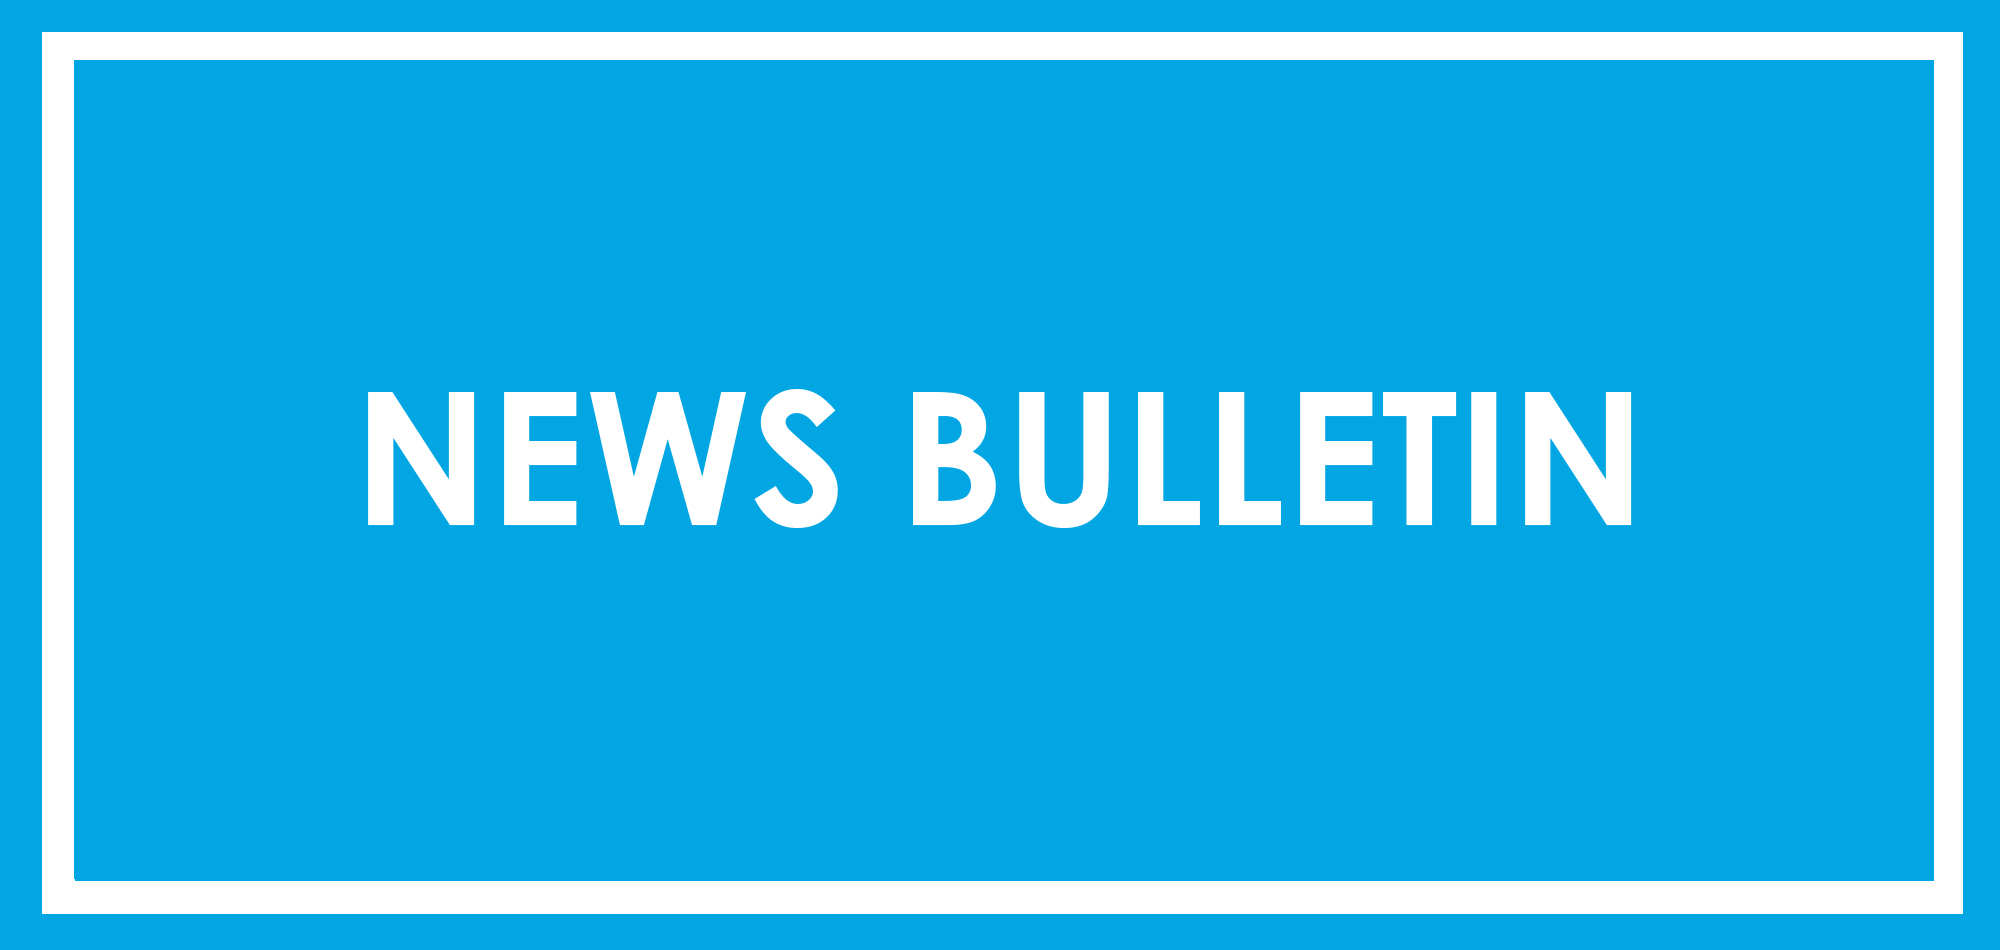 News Bulletin - 14.07.20